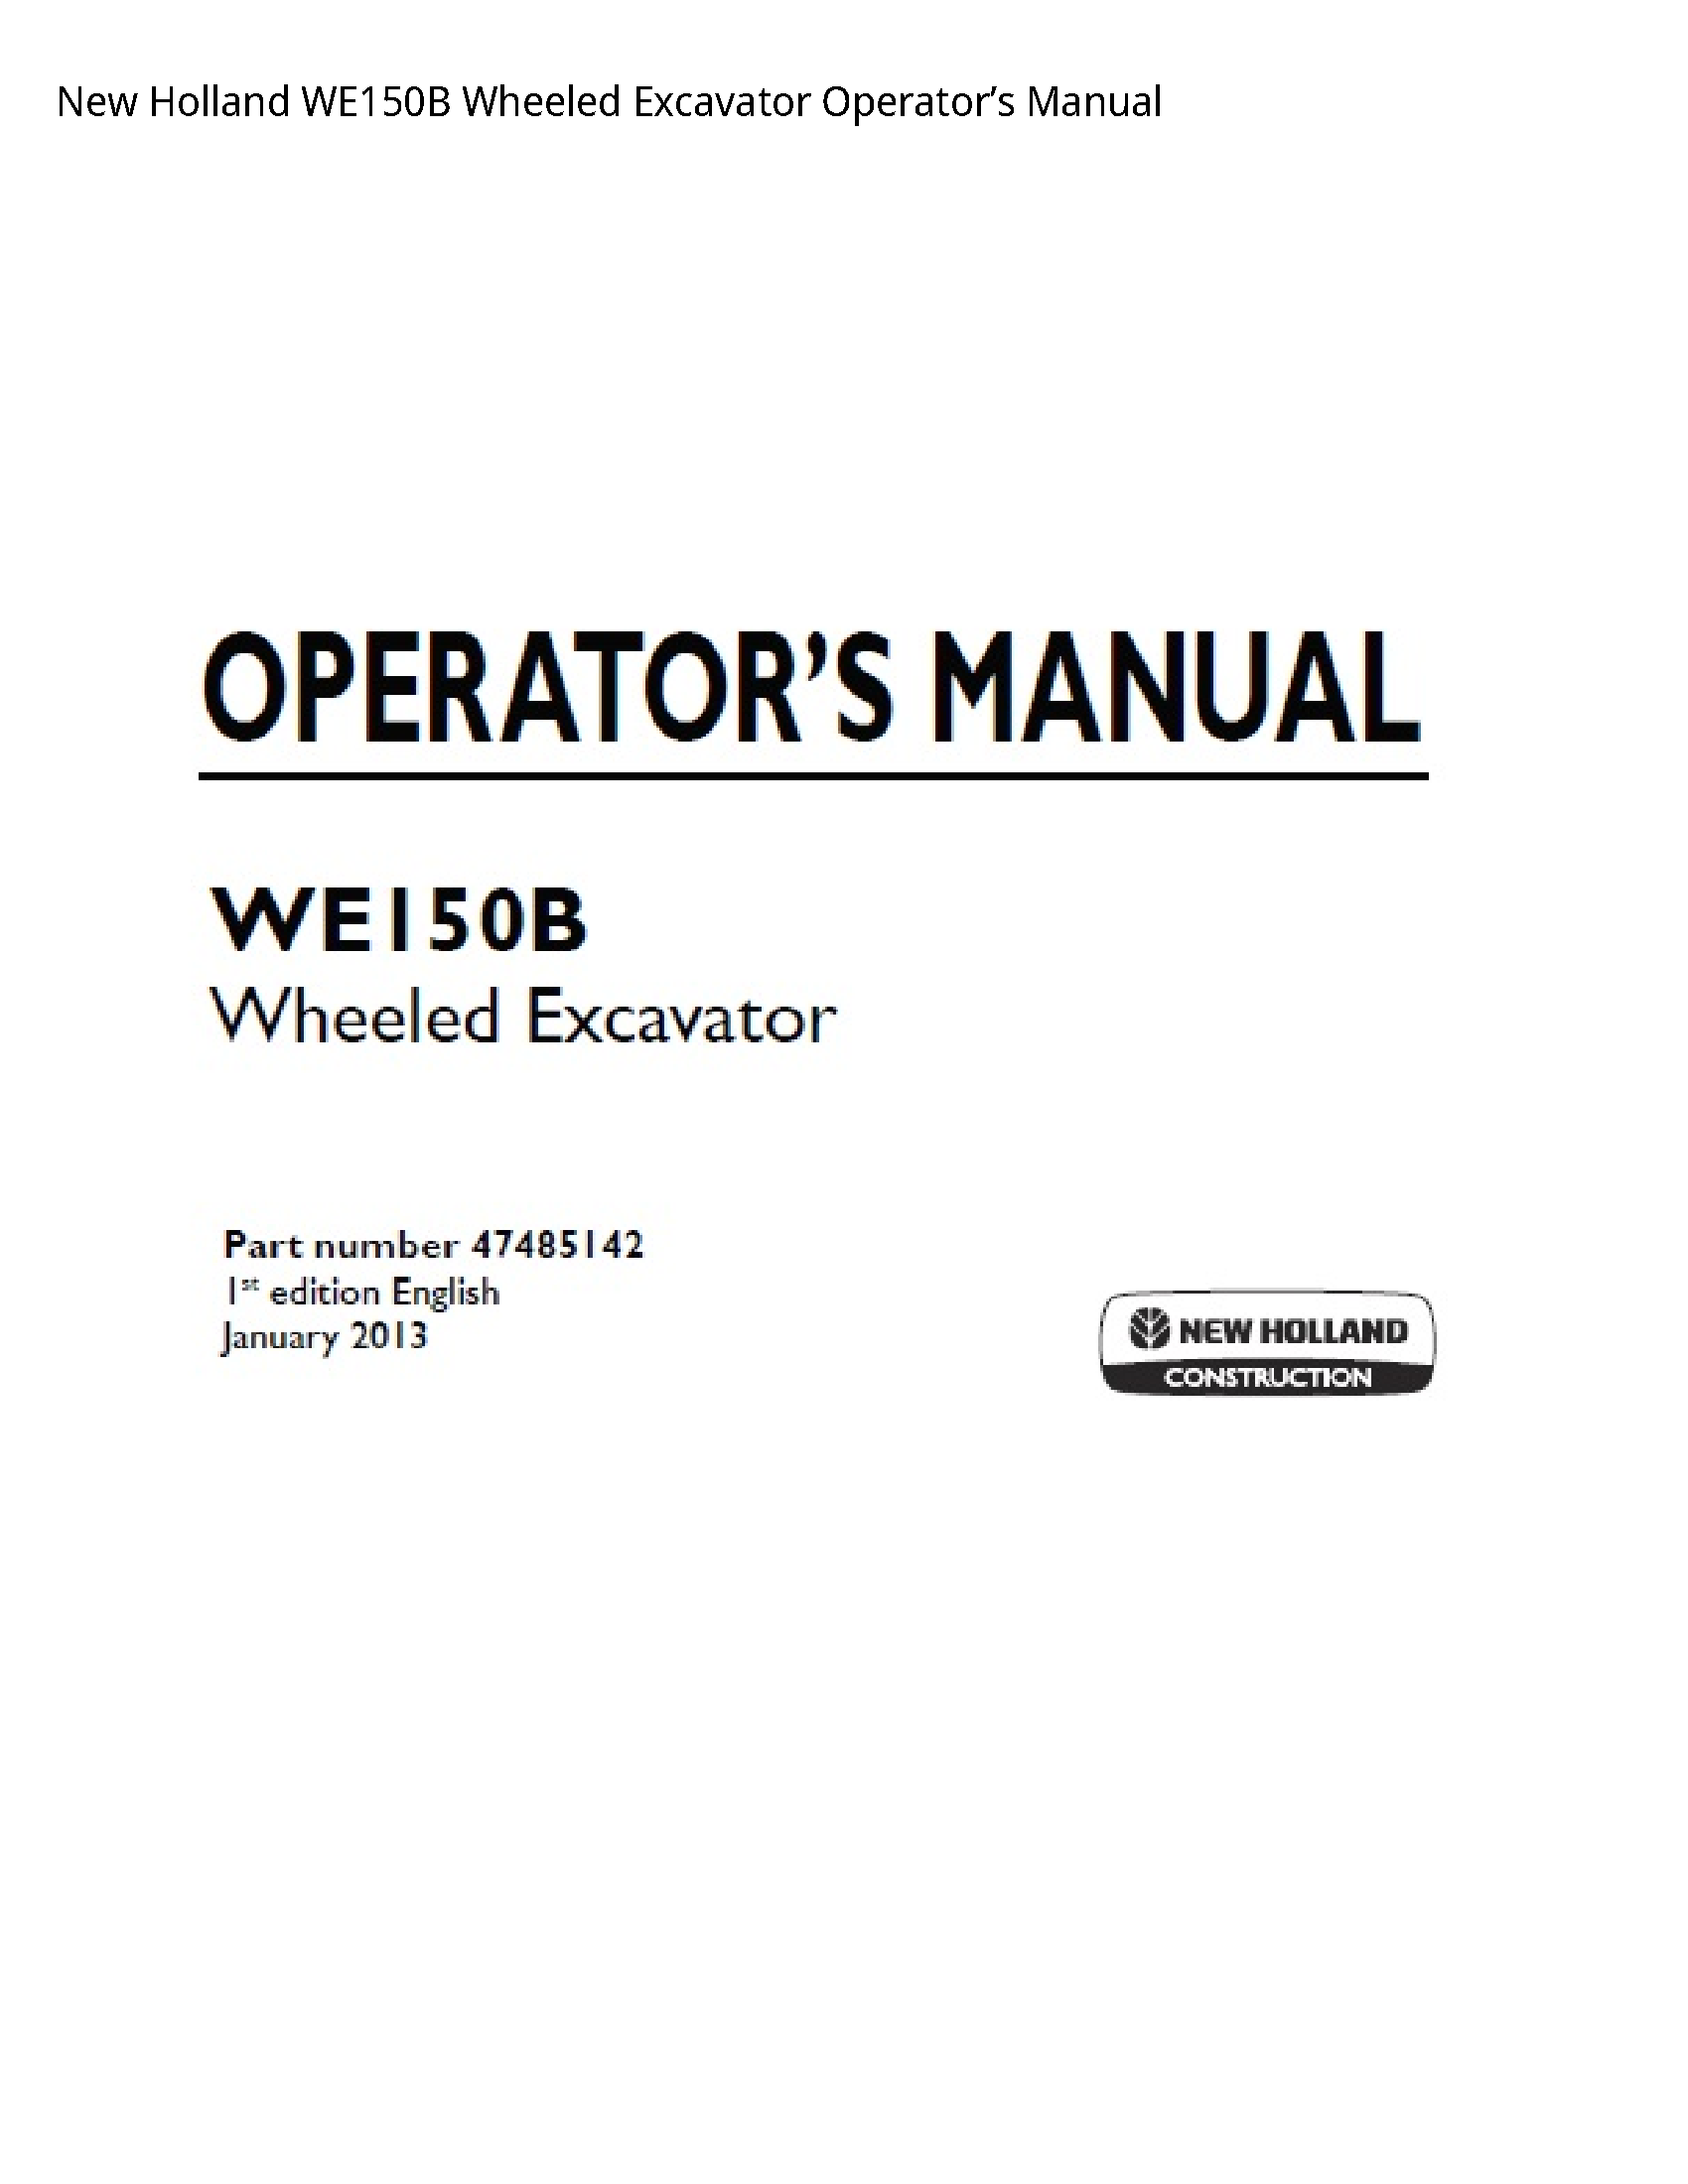 New Holland WE150B Wheeled Excavator Operator’s manual